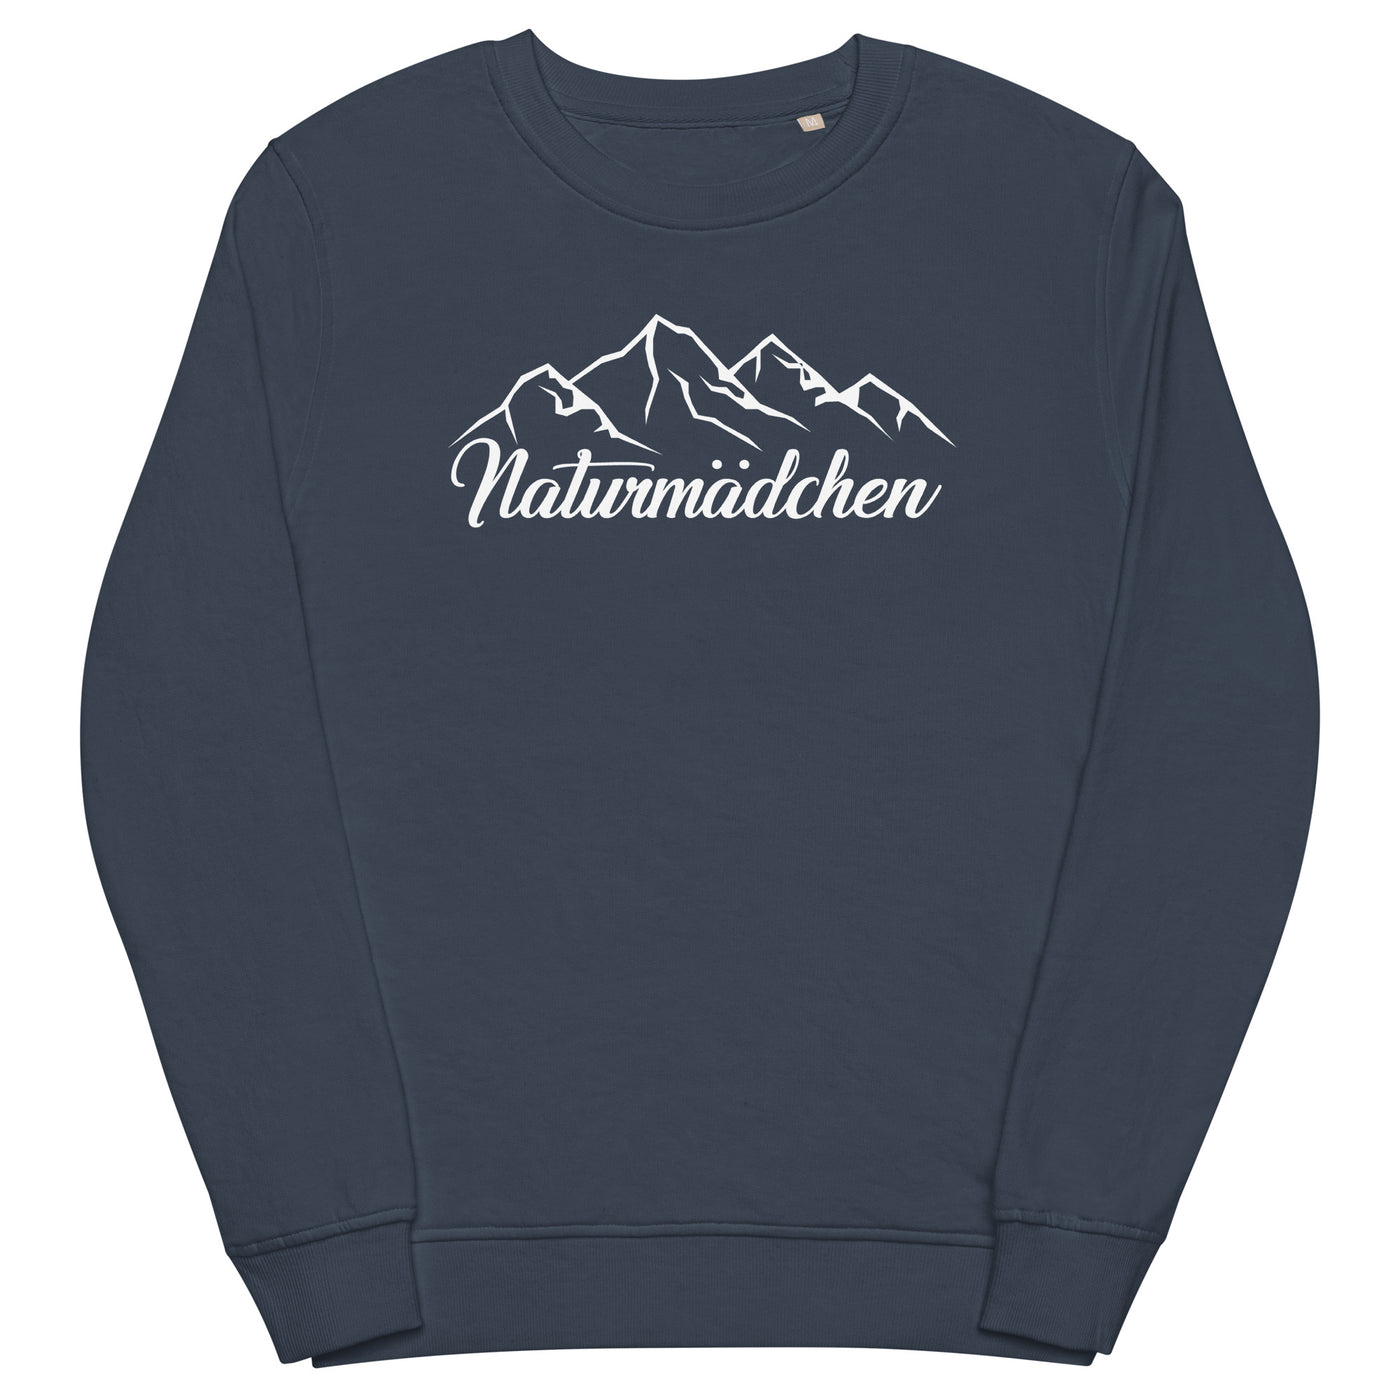 Naturmadchen - Unisex Premium Organic Sweatshirt berge xxx yyy zzz French Navy